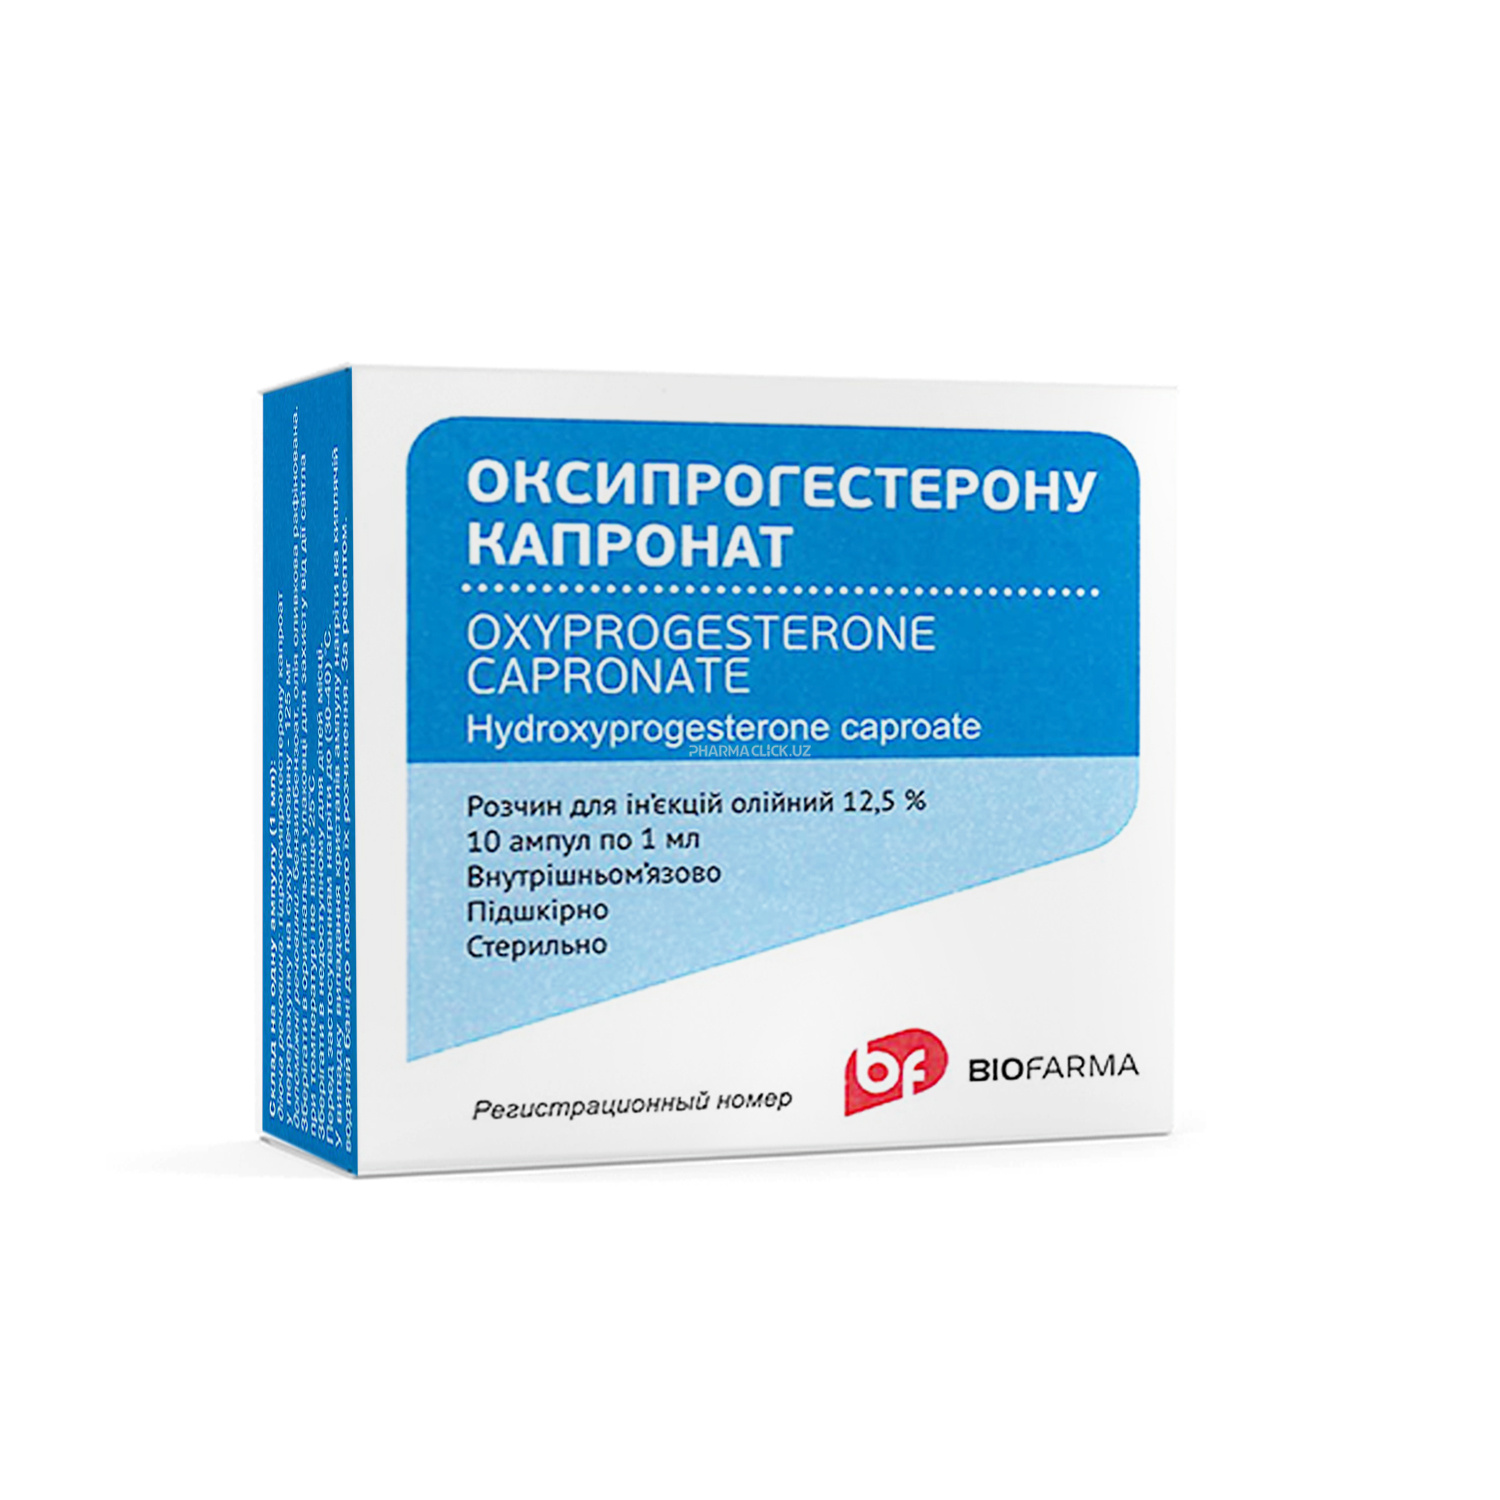 Оксипрогестерона капронат 12,5% 1мл №10